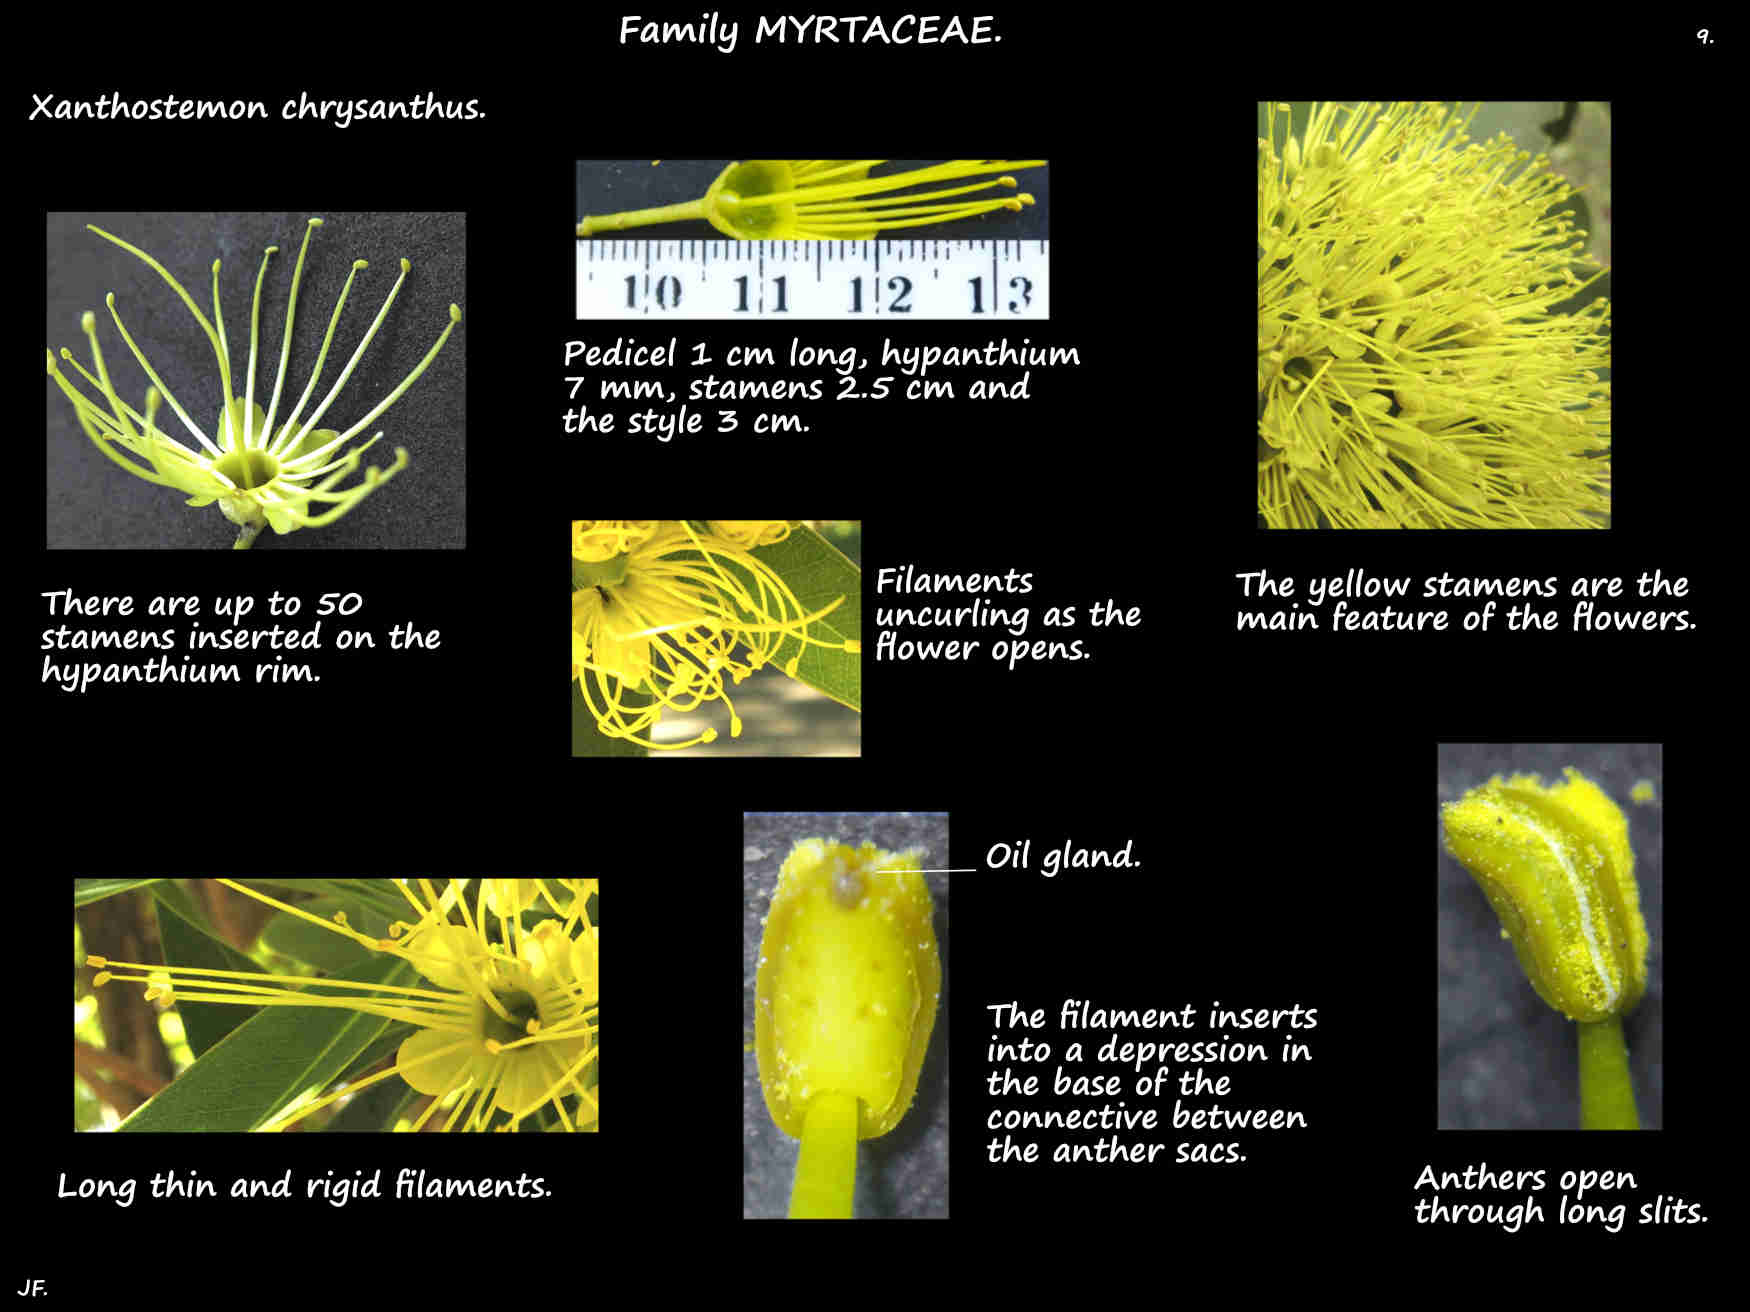 9 Xanthostemon chrysanthus stamens